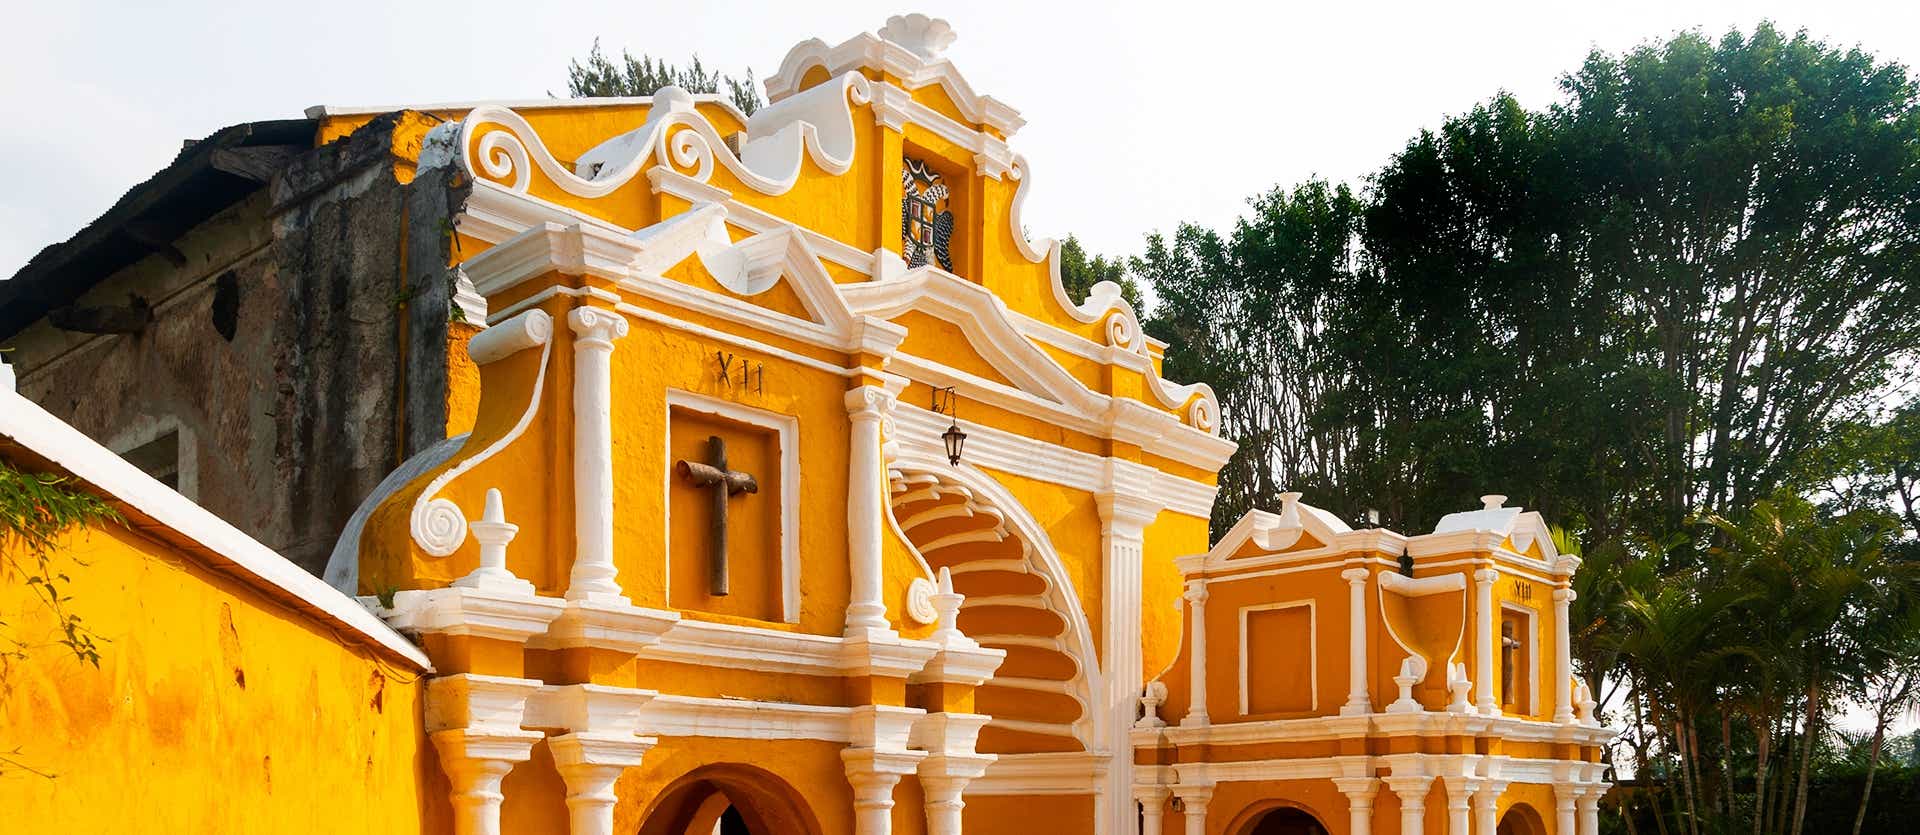 Calvario Hermitage <span class="iconos separador"></span> Antigua Guatemala